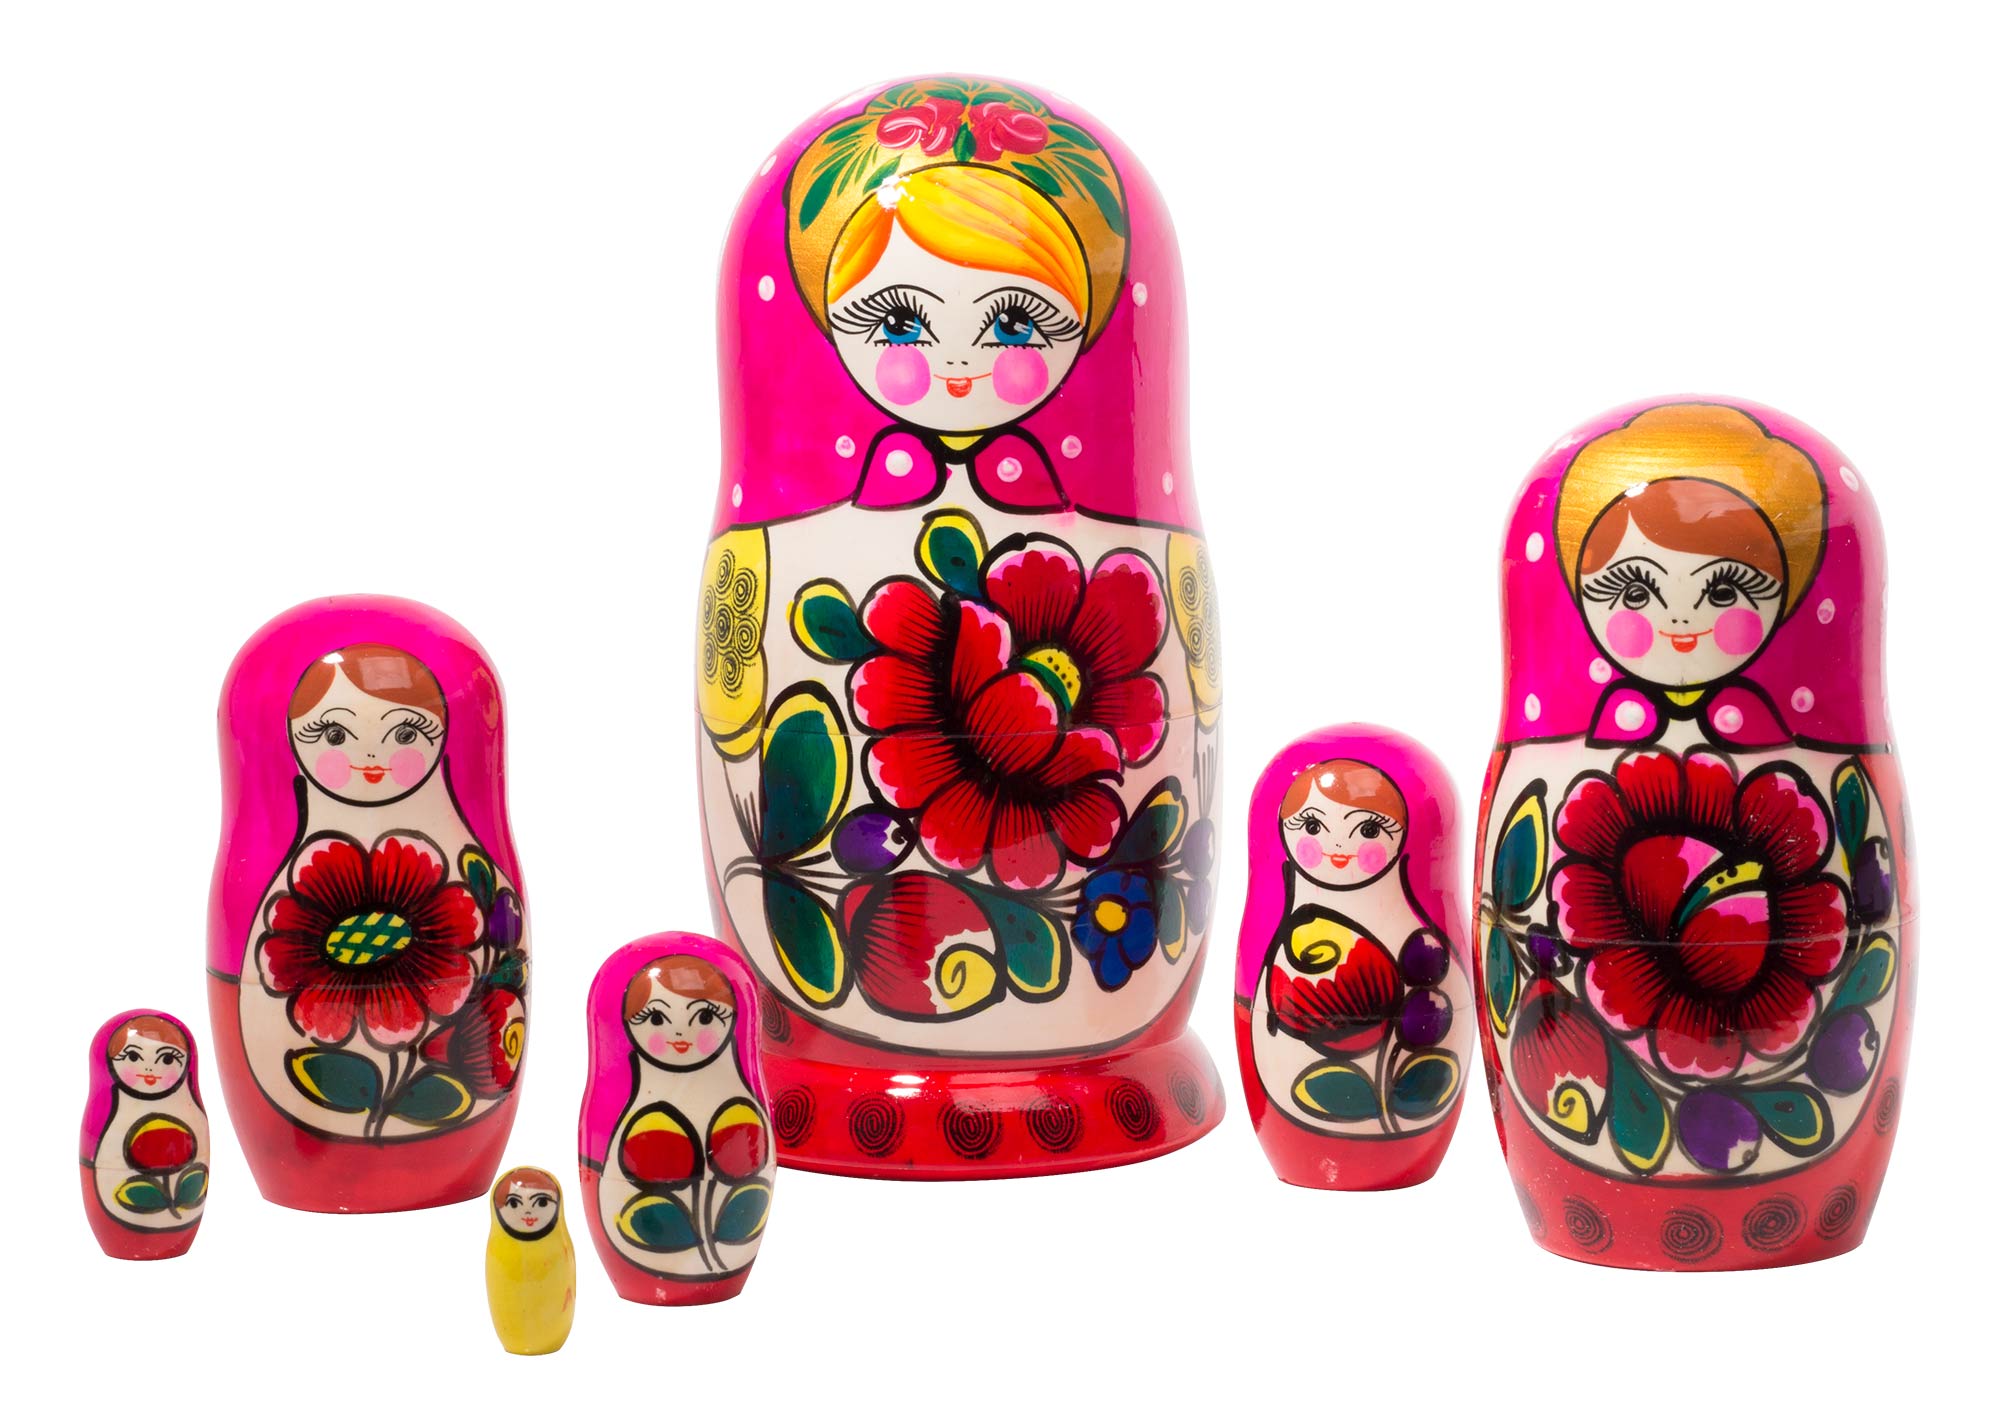 Buy Polkhovski Maidan Nesting Doll 7pc./8" at GoldenCockerel.com